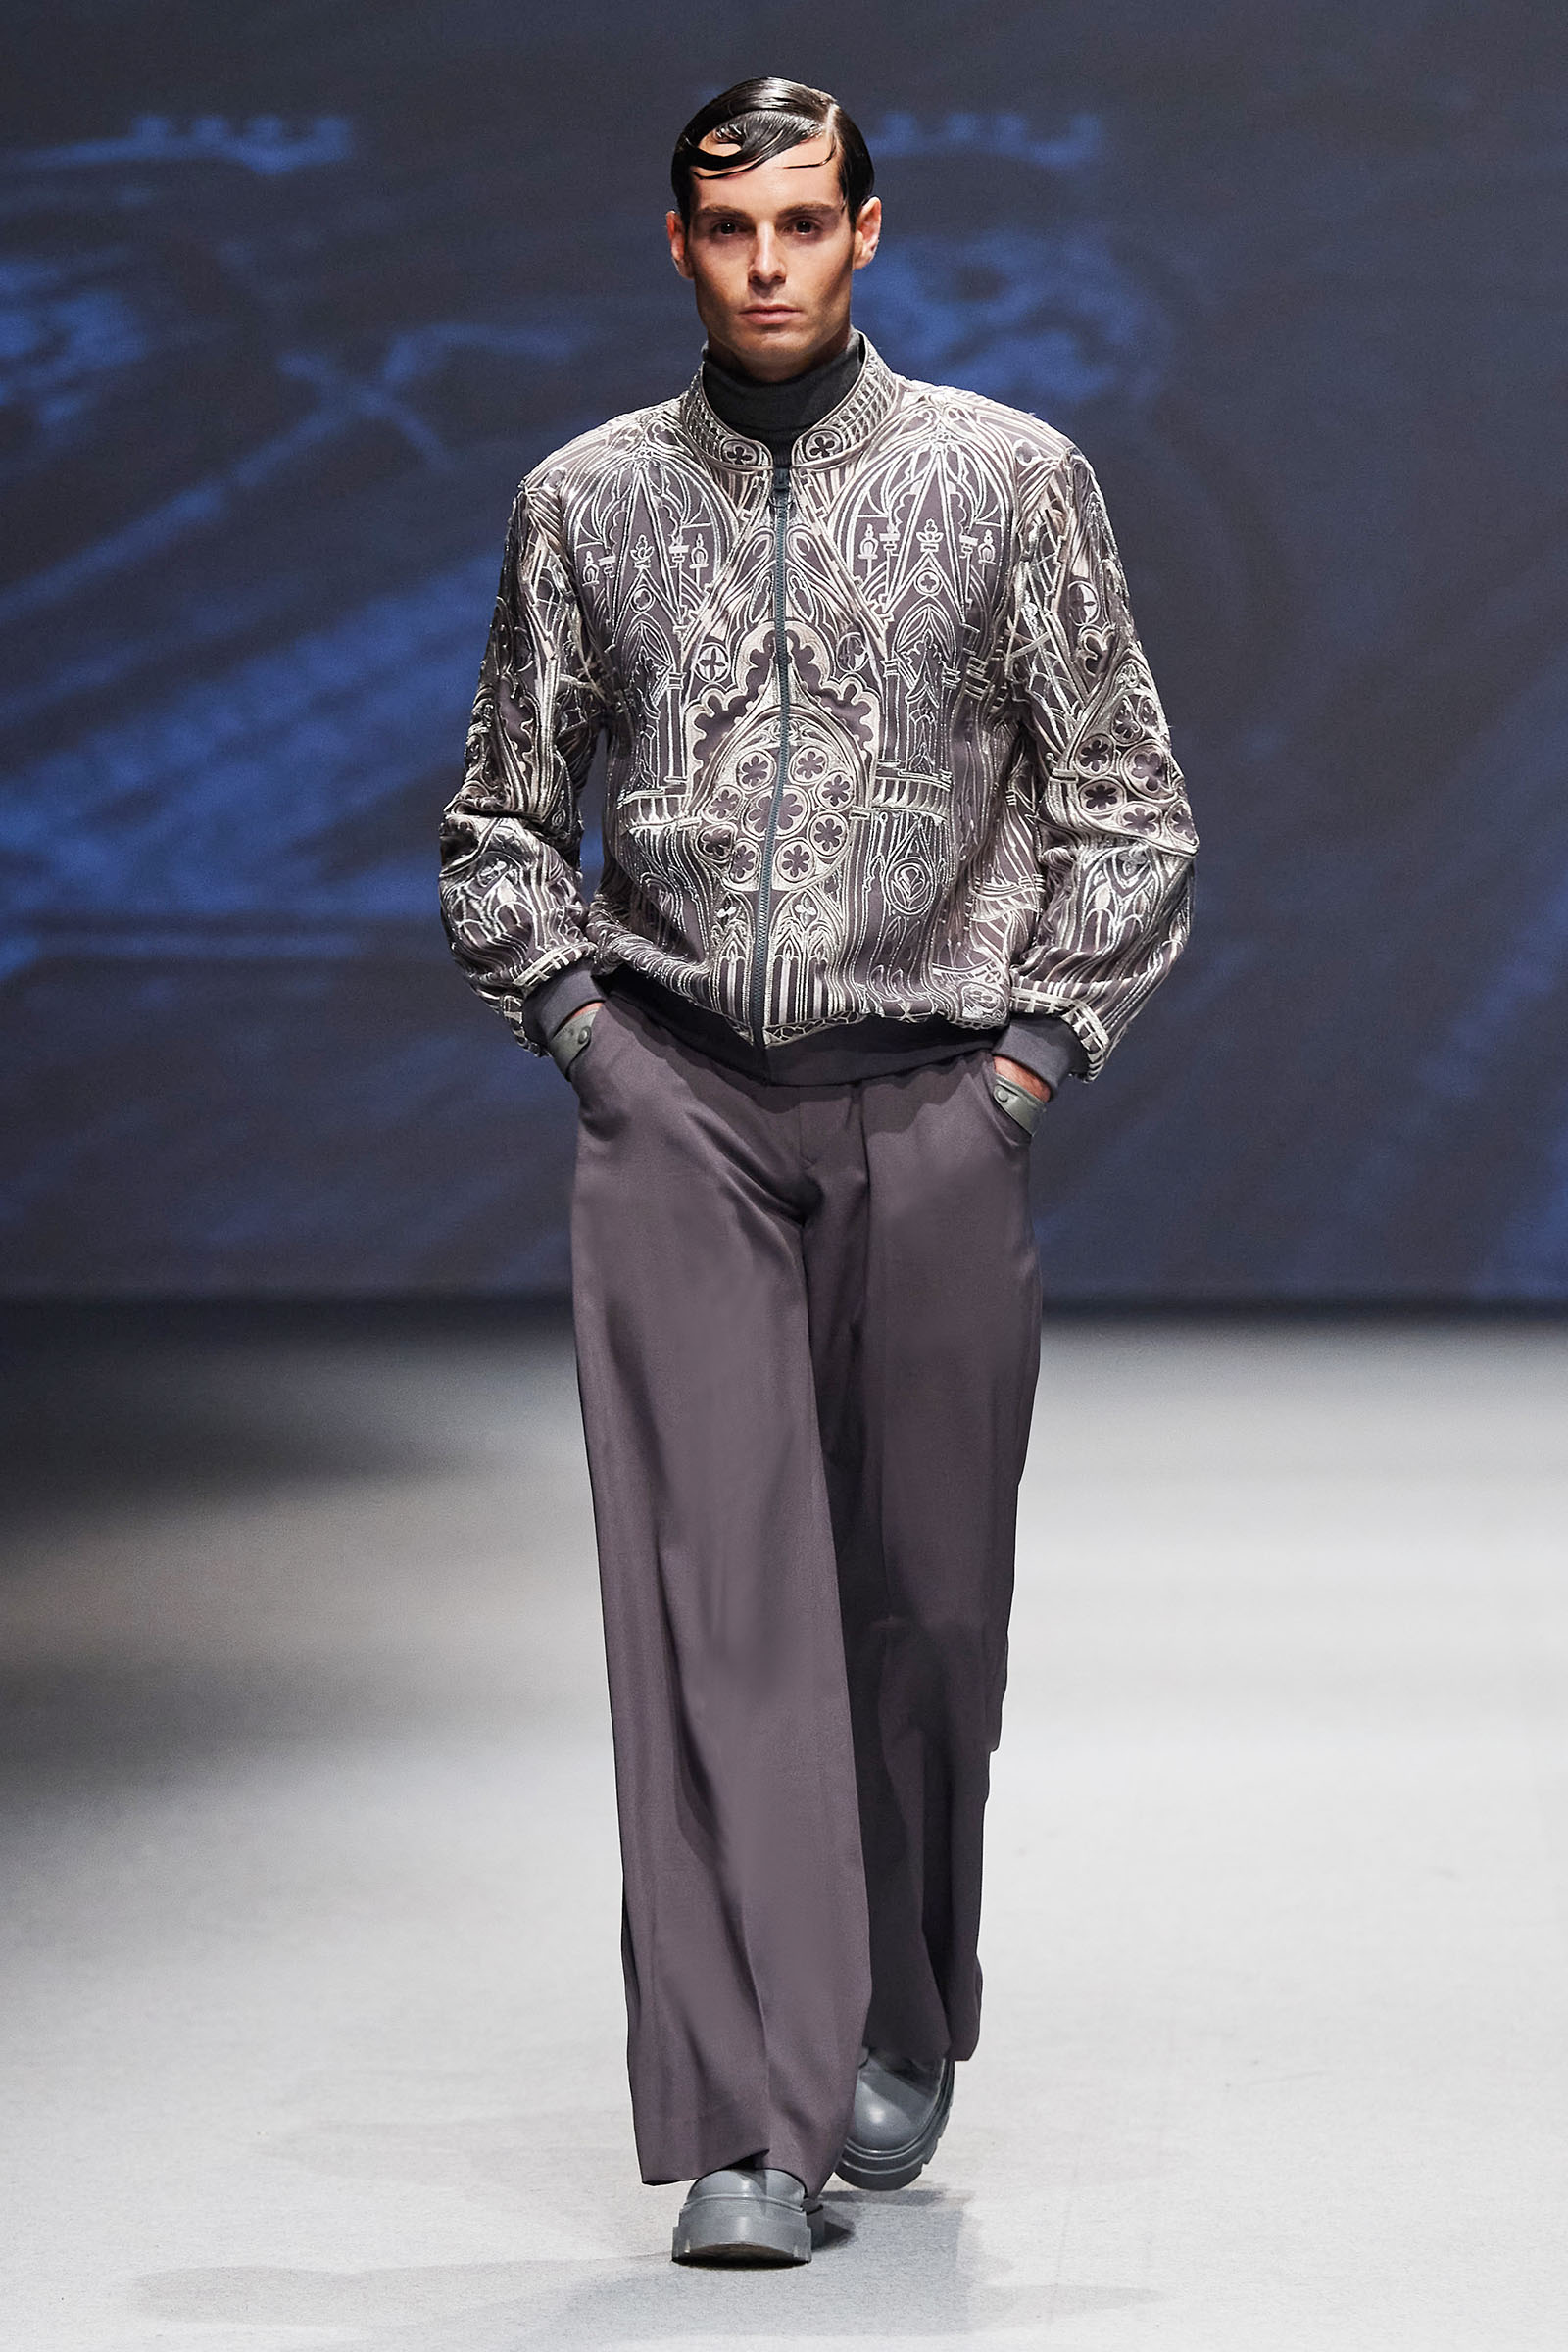 Michael Cinco runway look silver jacket intricate design with gray slacks